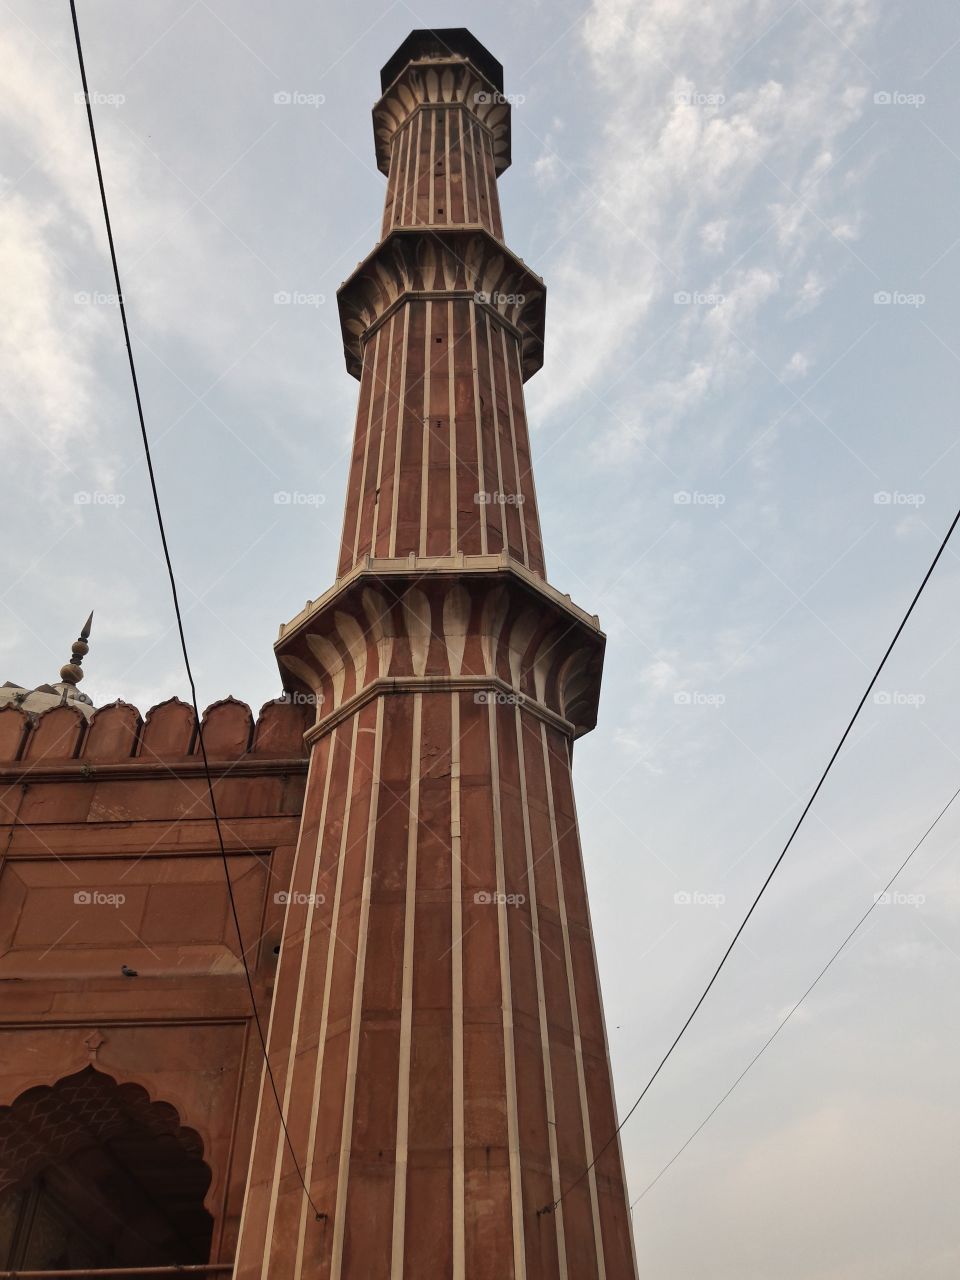 jama masjid tower